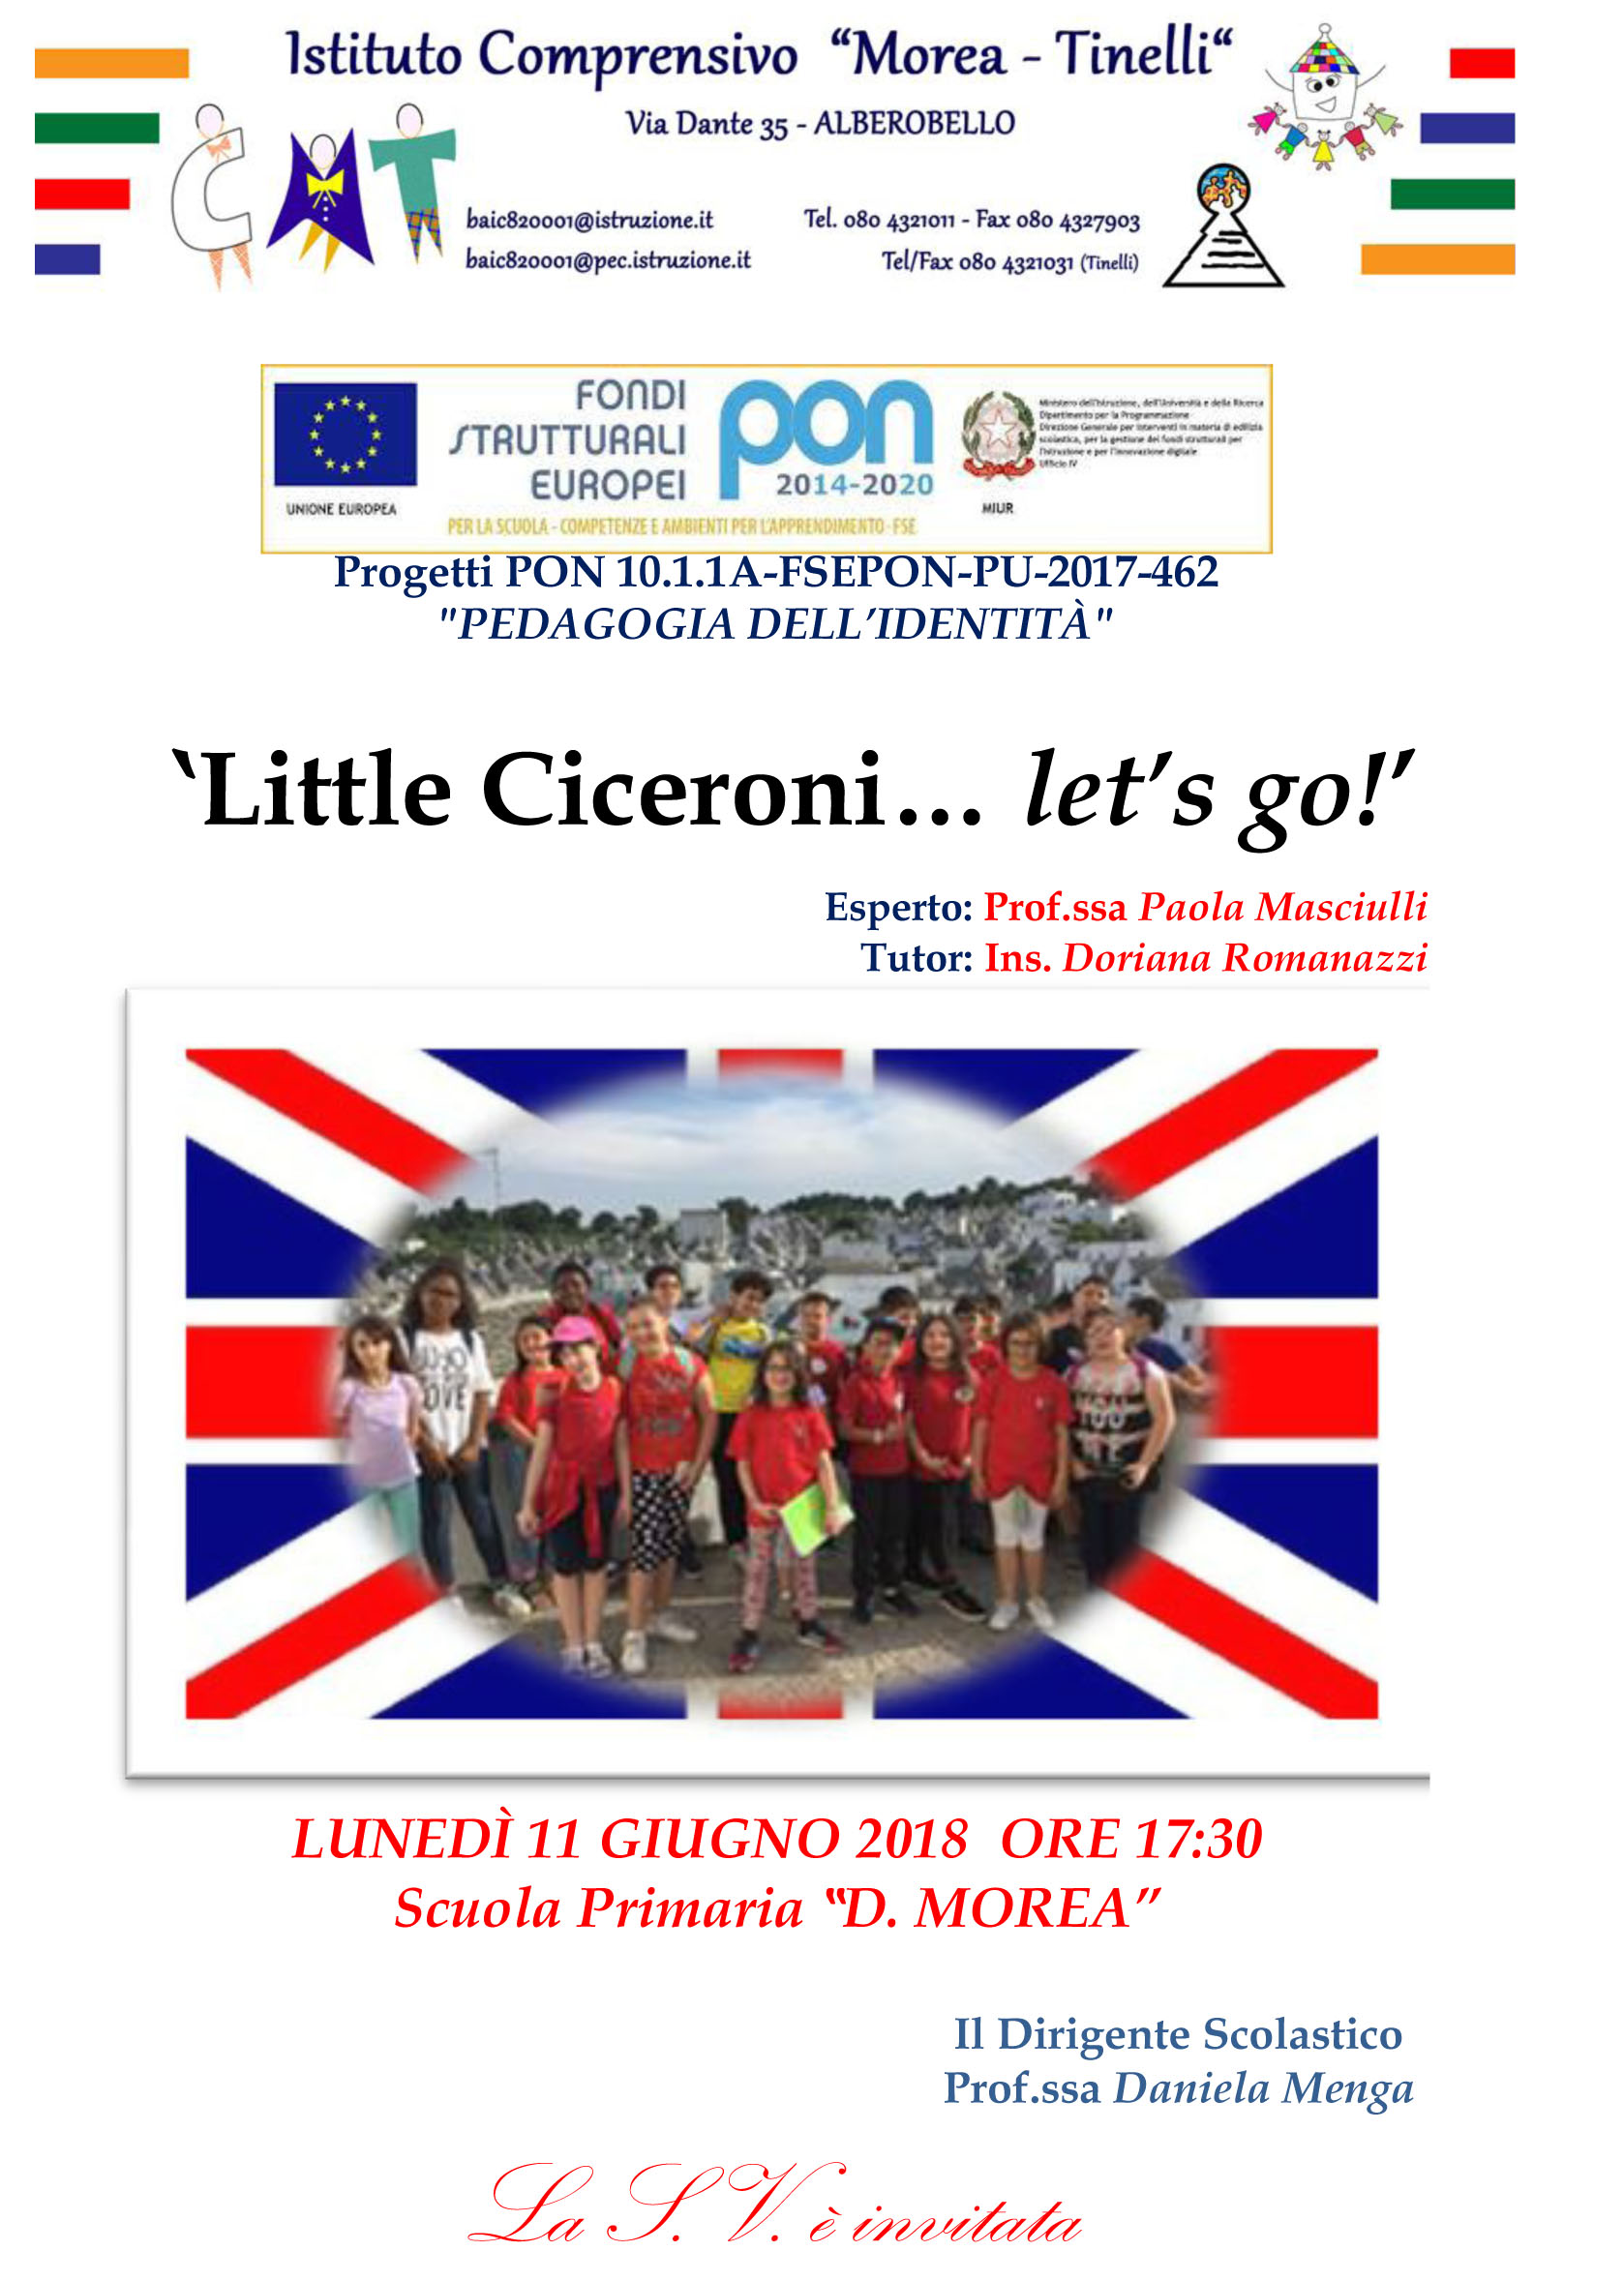 PON Little Ciceroni lets go